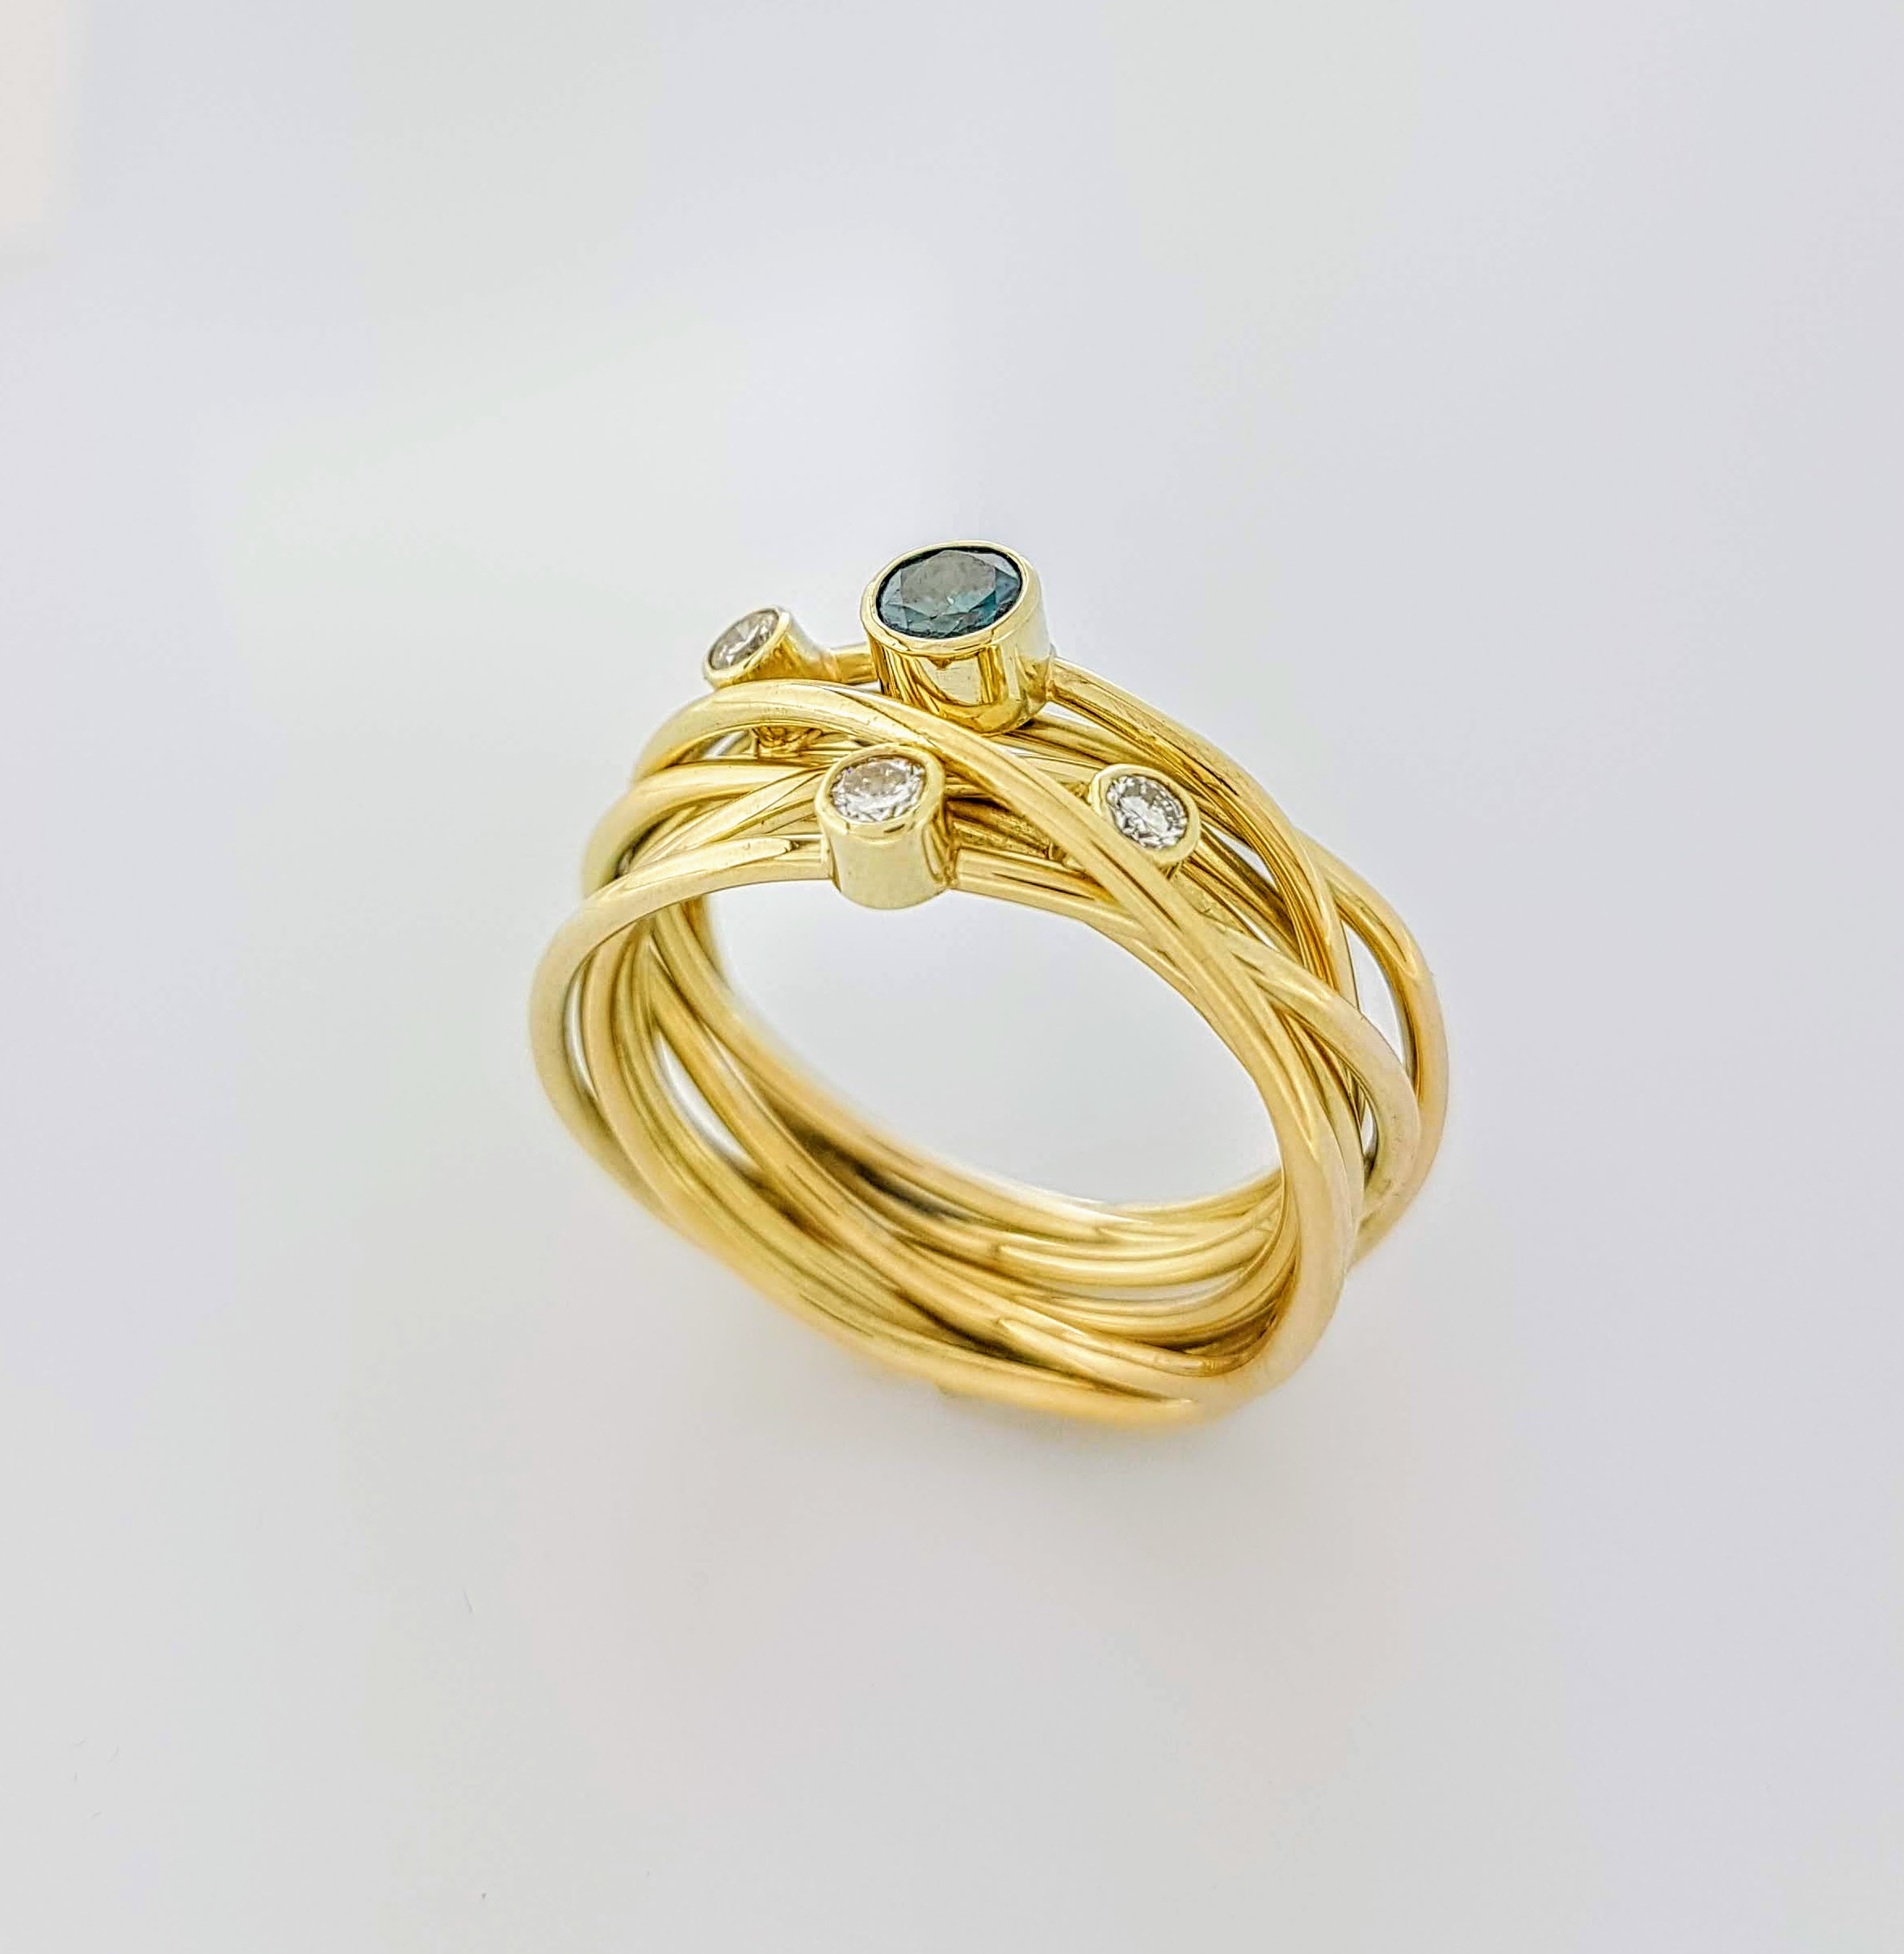 Super 14 karaat gouden ring Endless rope met groene en witte diamanten WZ-61